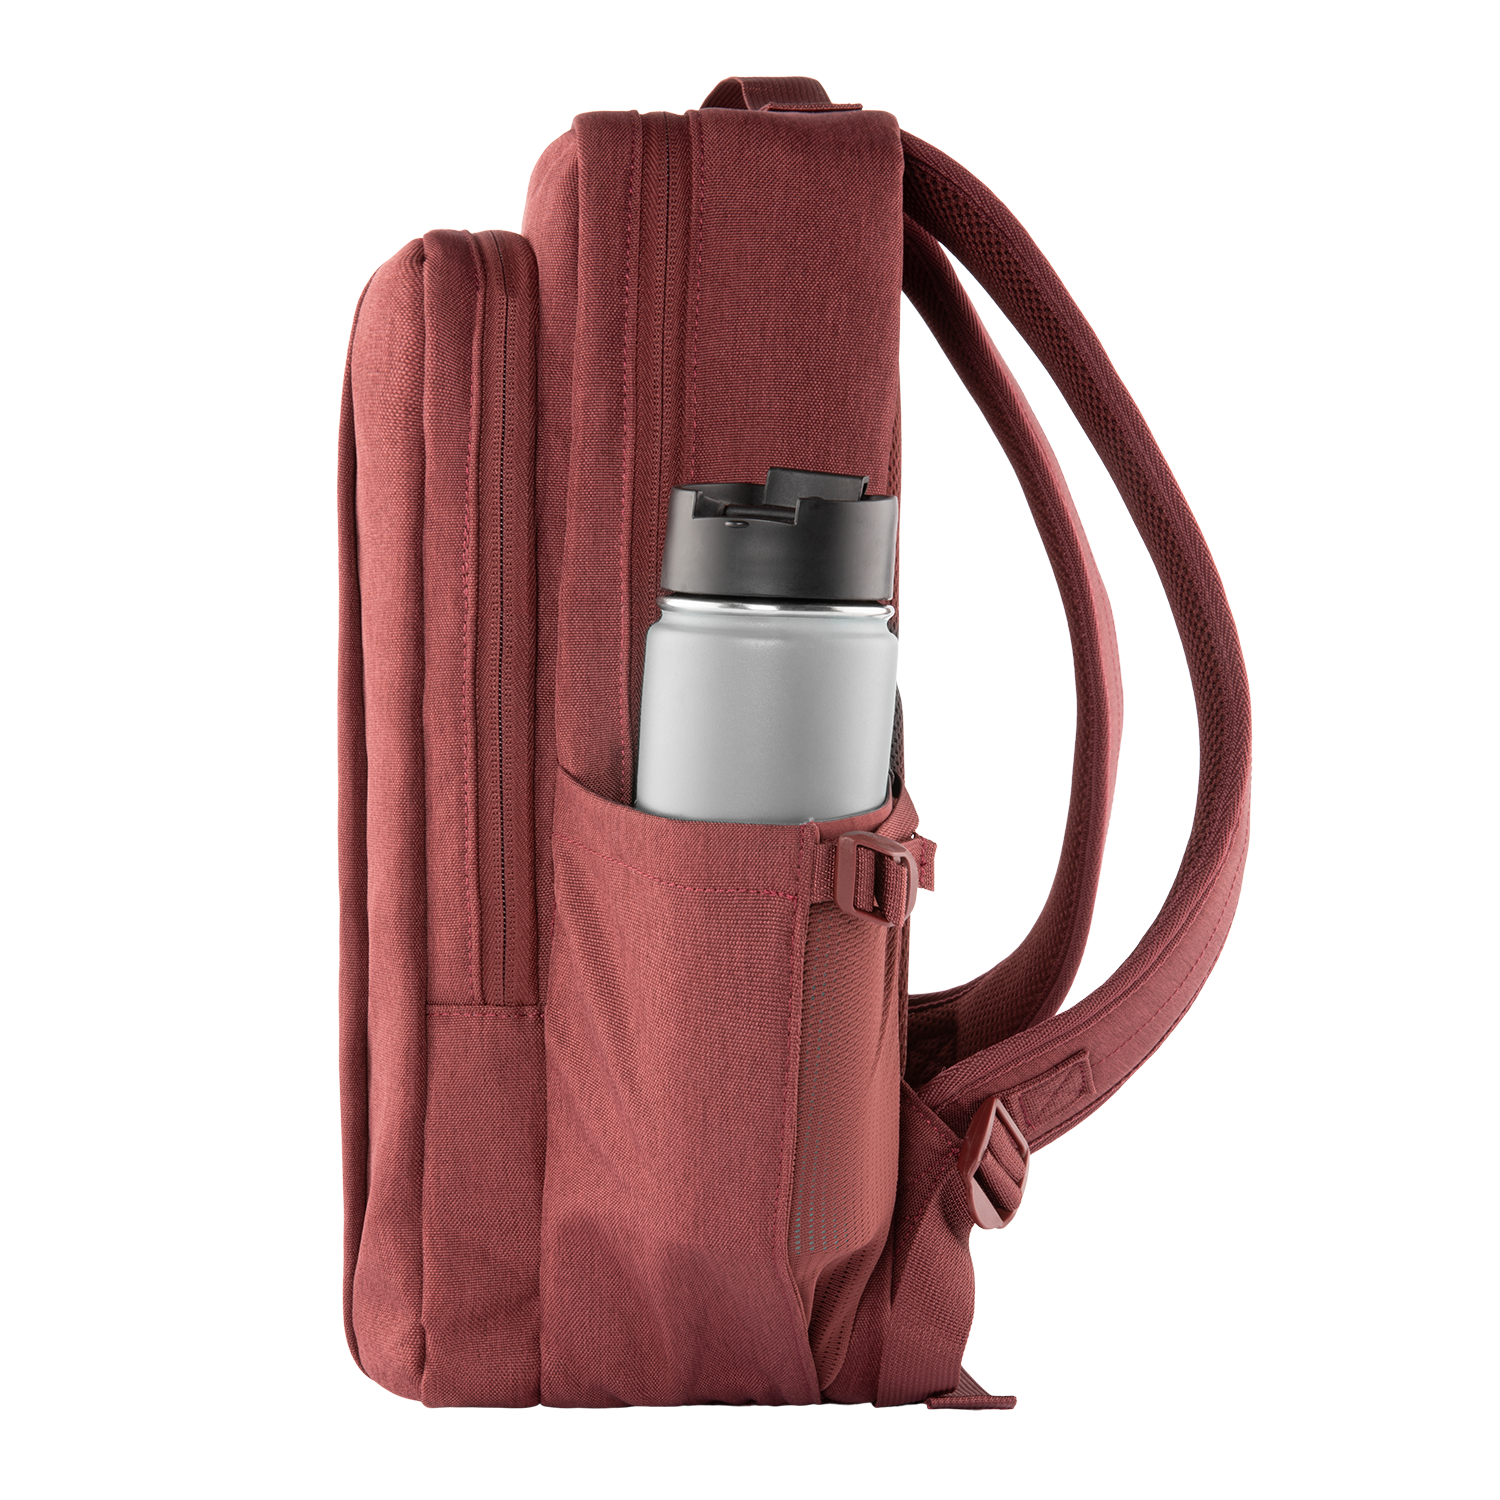 U] by UAG Mouve Backpack Everyday bag, Carry-on bag, Overnight bag 